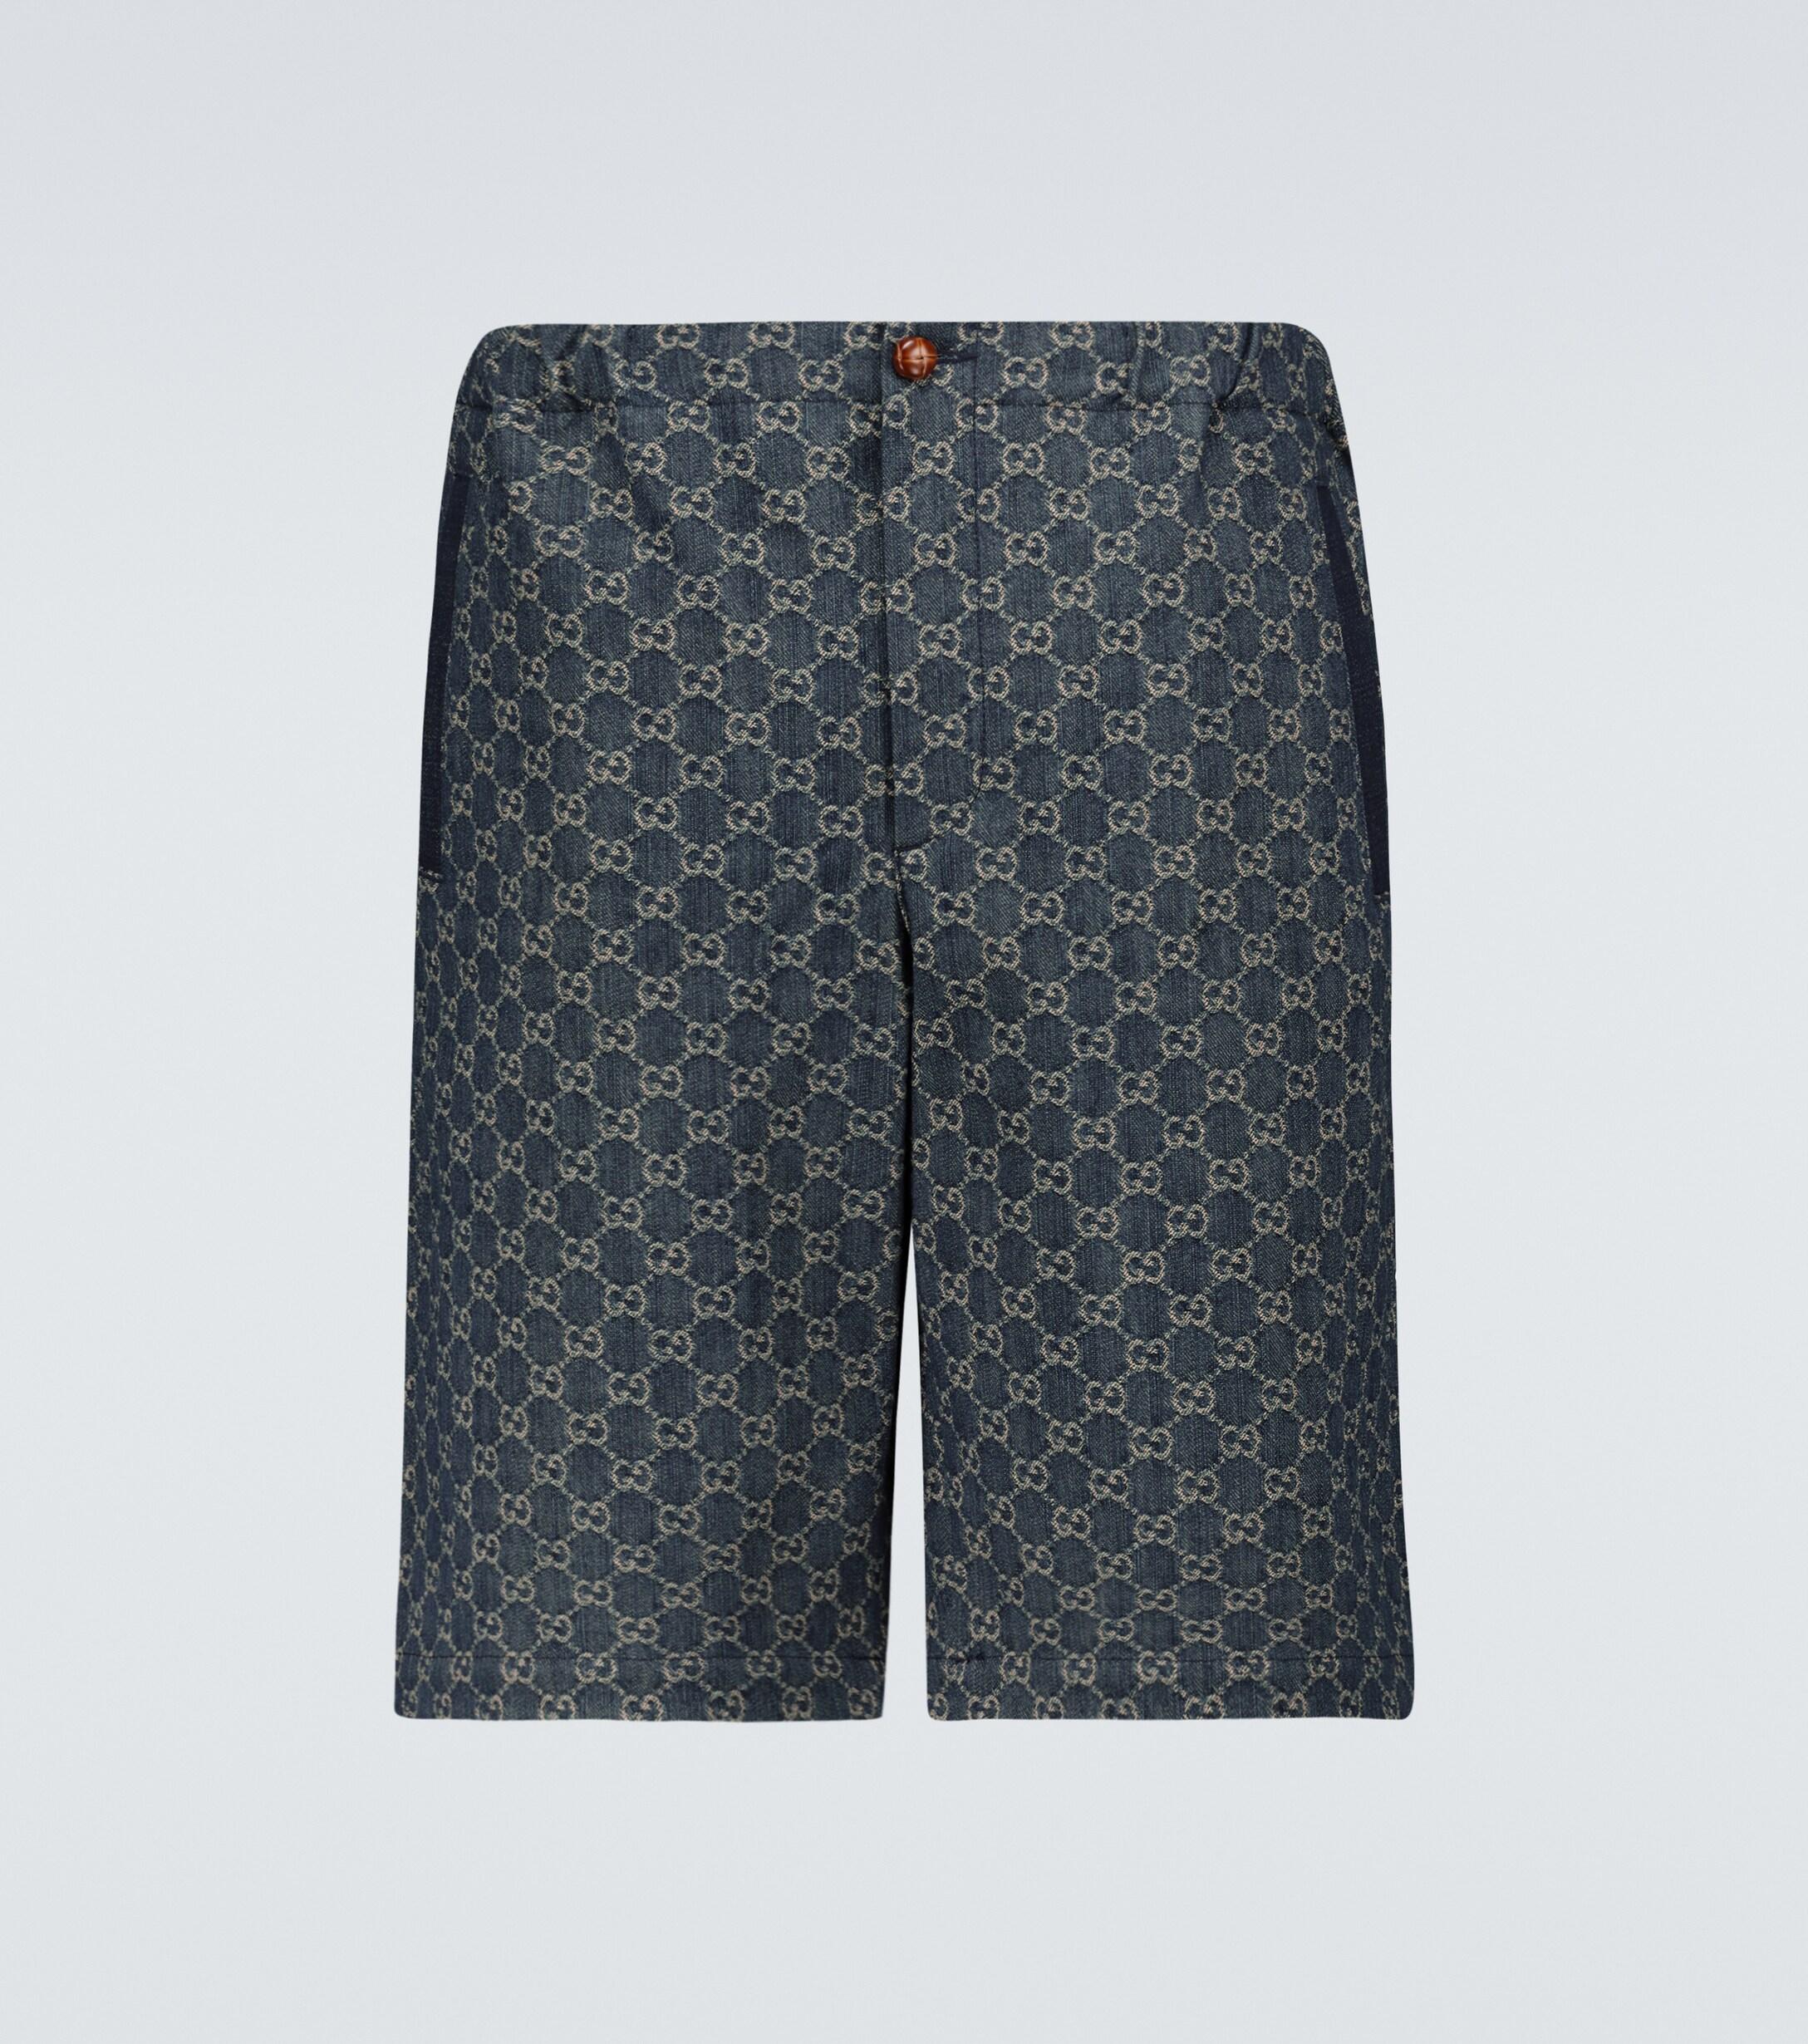 Gucci GG Denim Shorts in Blue for Men - Lyst